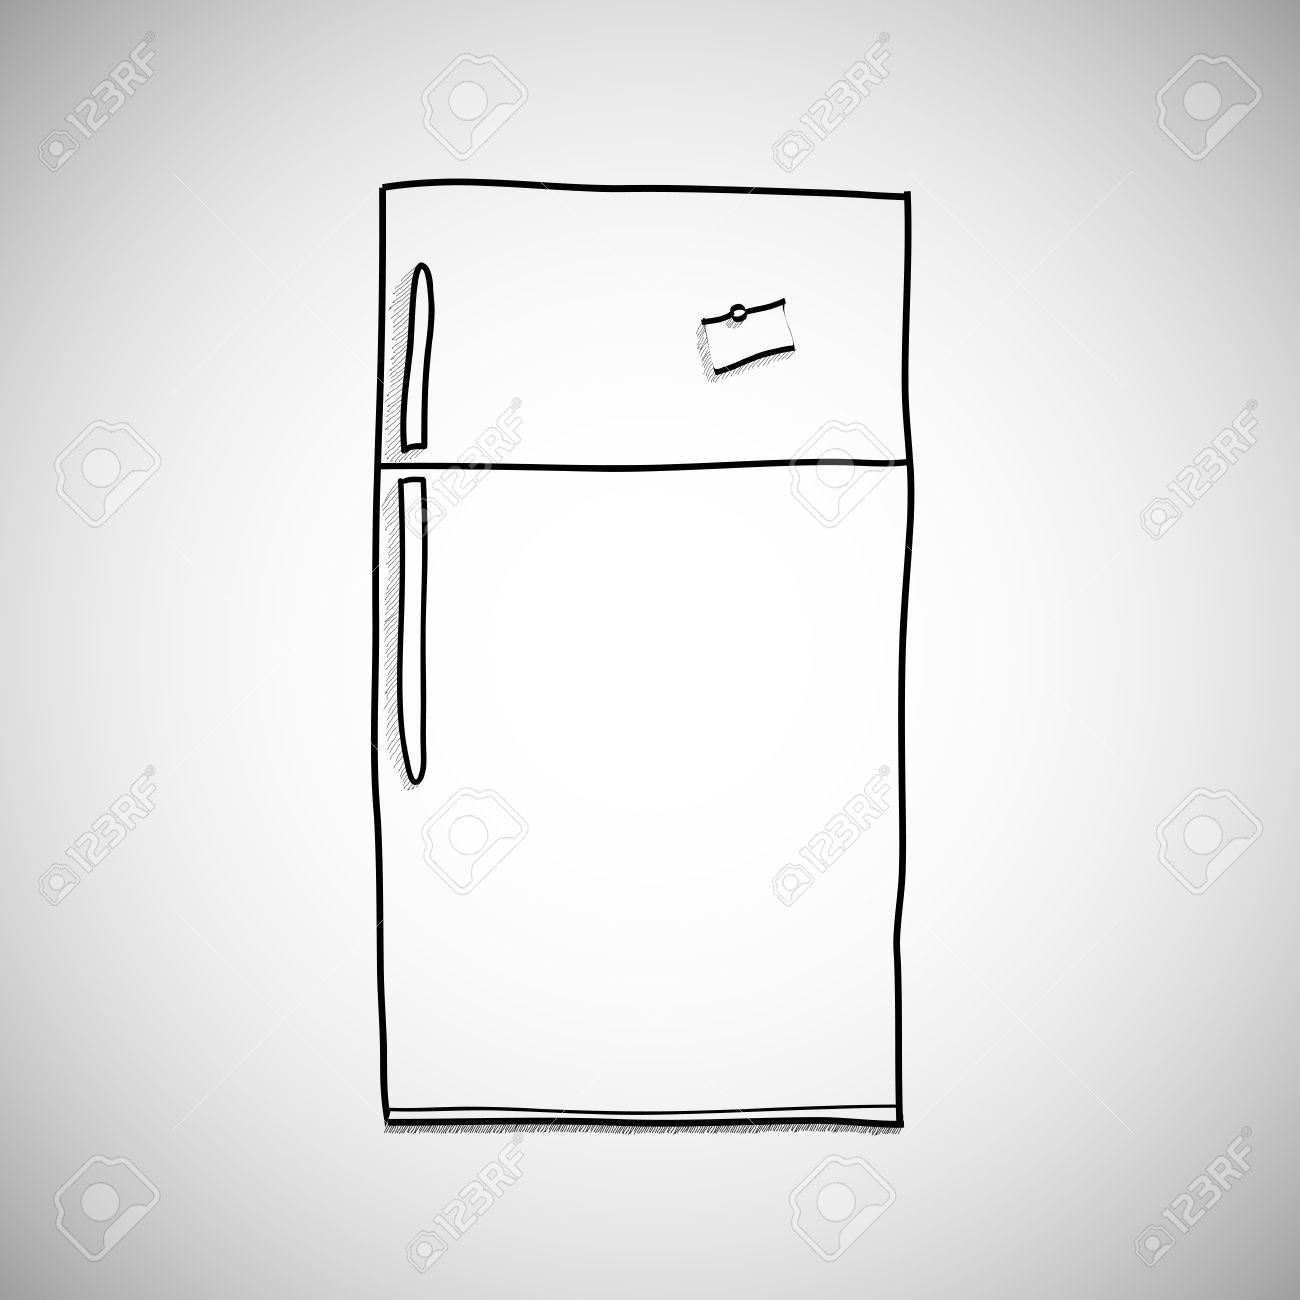 Hand Drawn Refrigerator Vector Cartoon Illustration Isolated